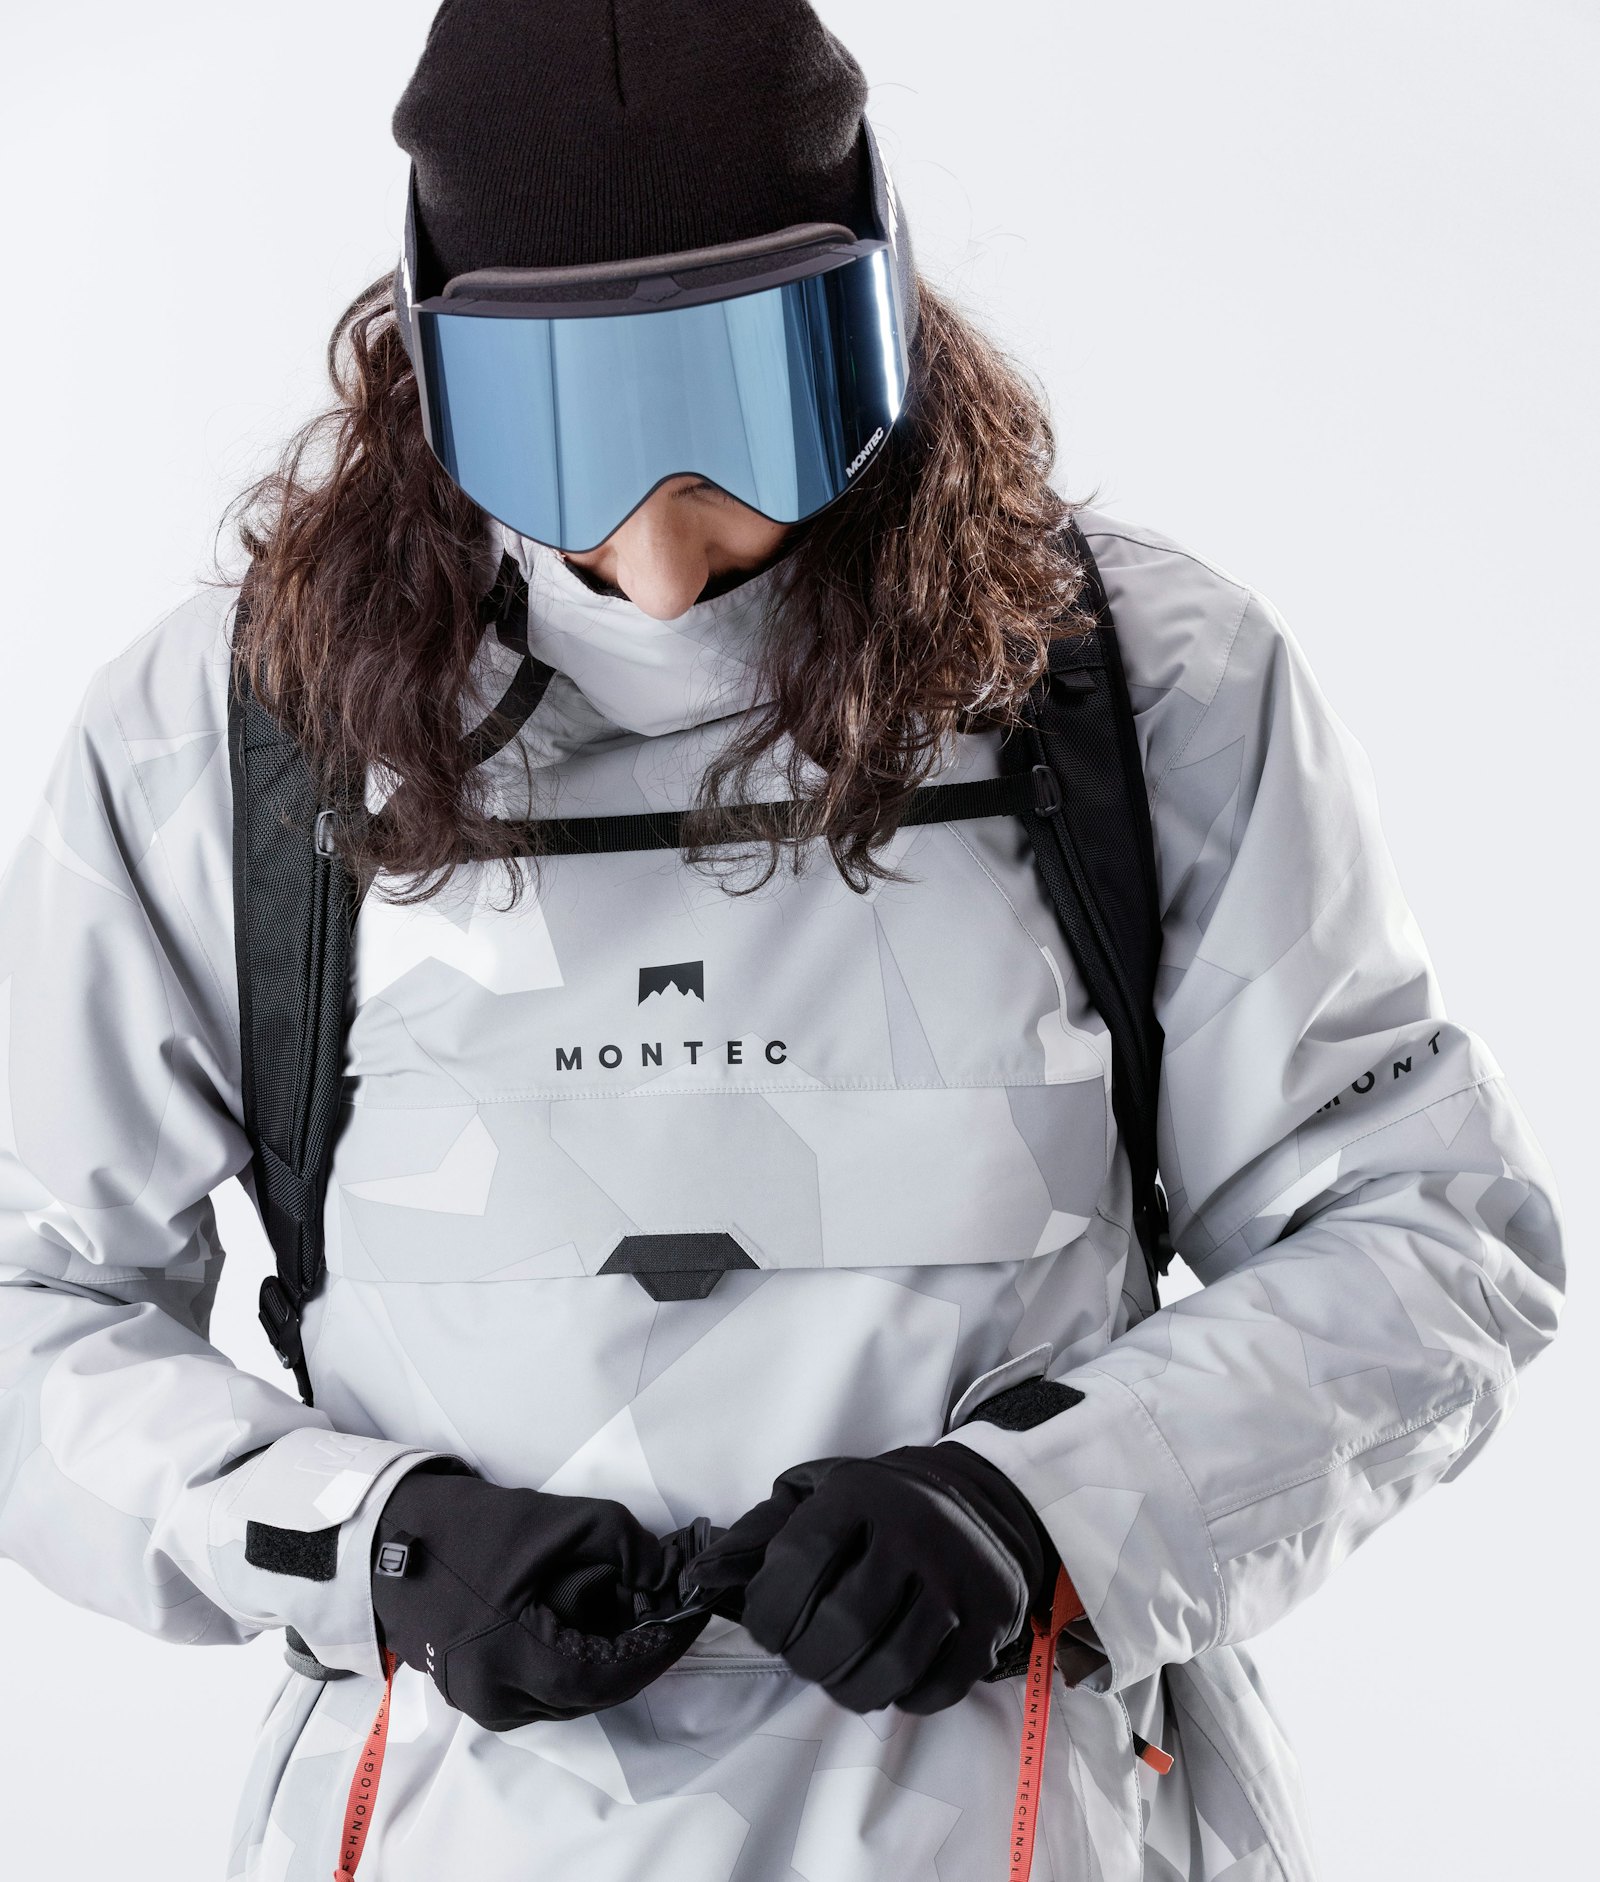 Dune 2020 スキージャケット メンズ Snow Camo